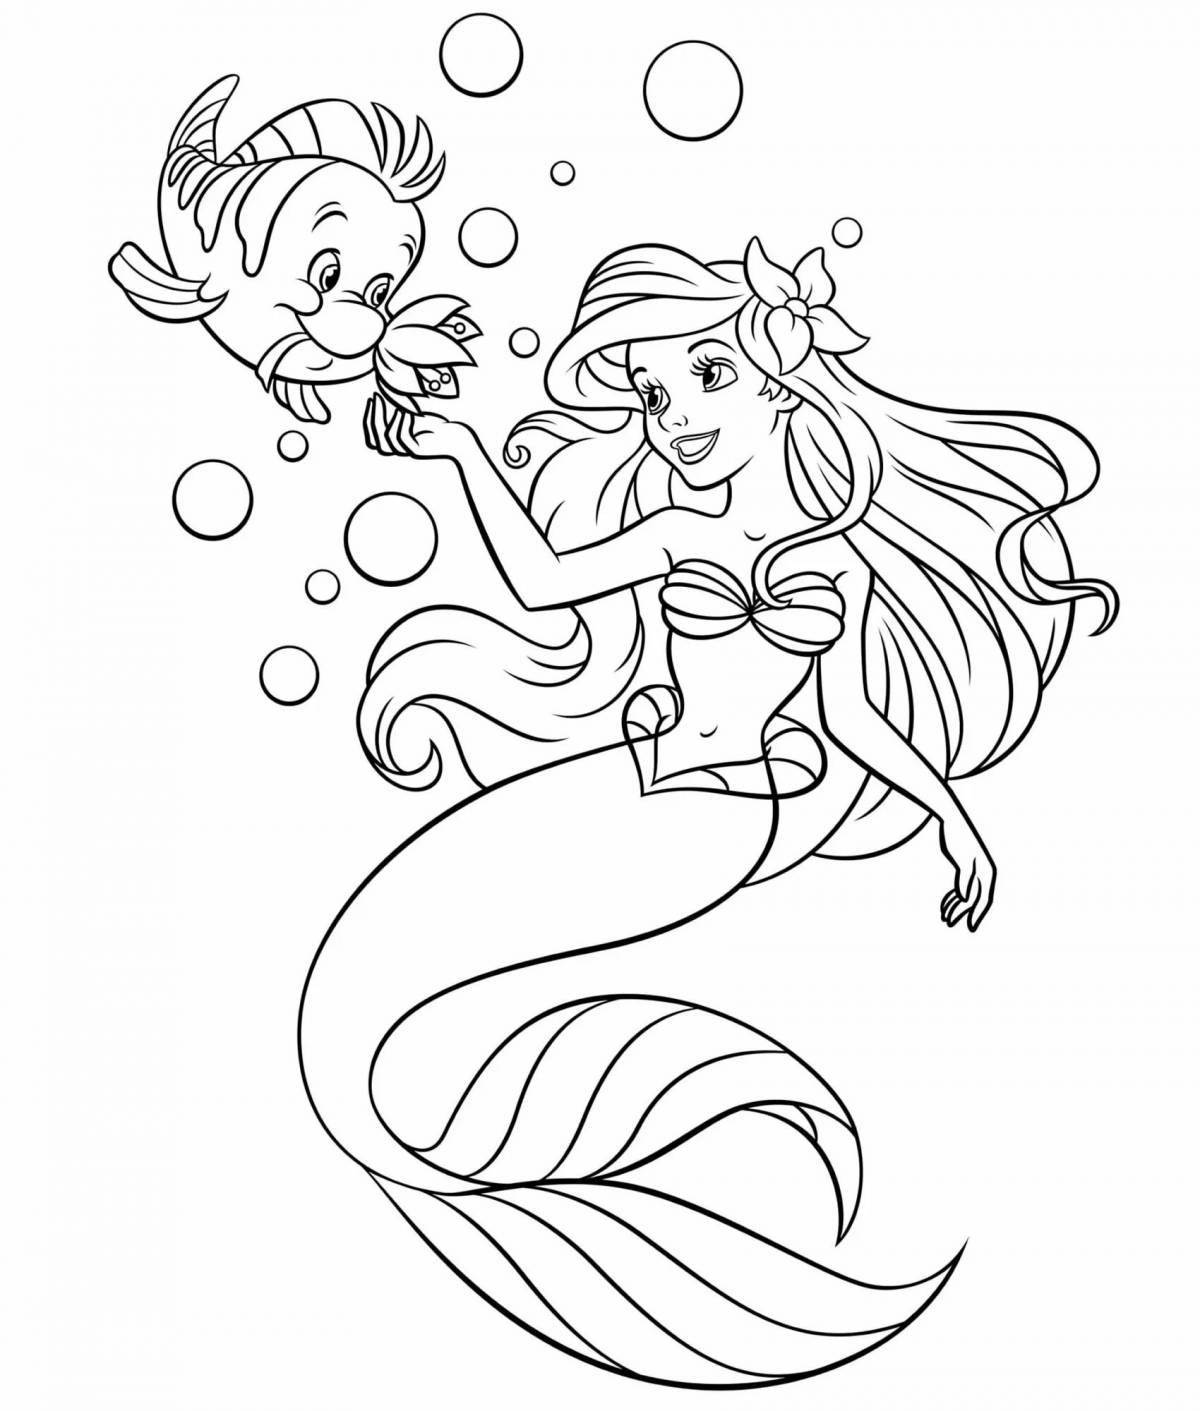 Joyful little mermaid coloring book for girls